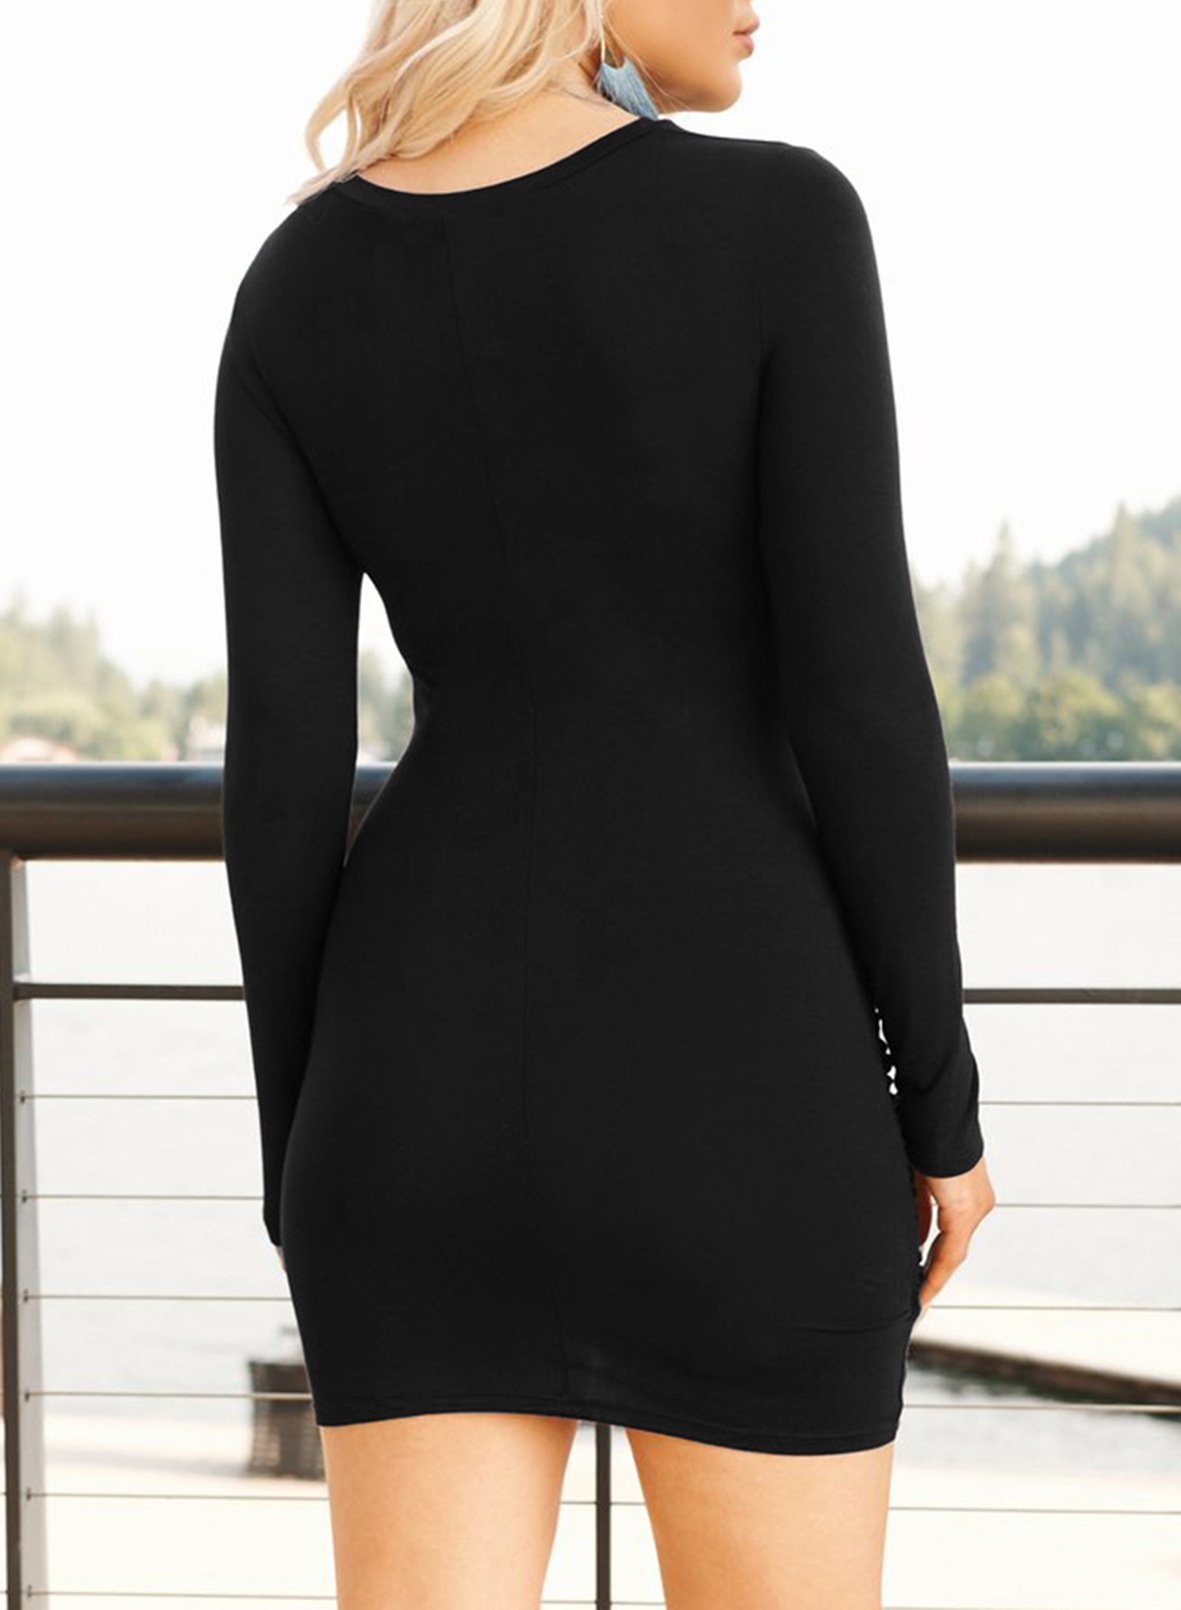 Long Sleeves Midriff Baring Sexy Bodycon Dresses-Sexy Dresses-Khaki-S-Free Shipping Leatheretro